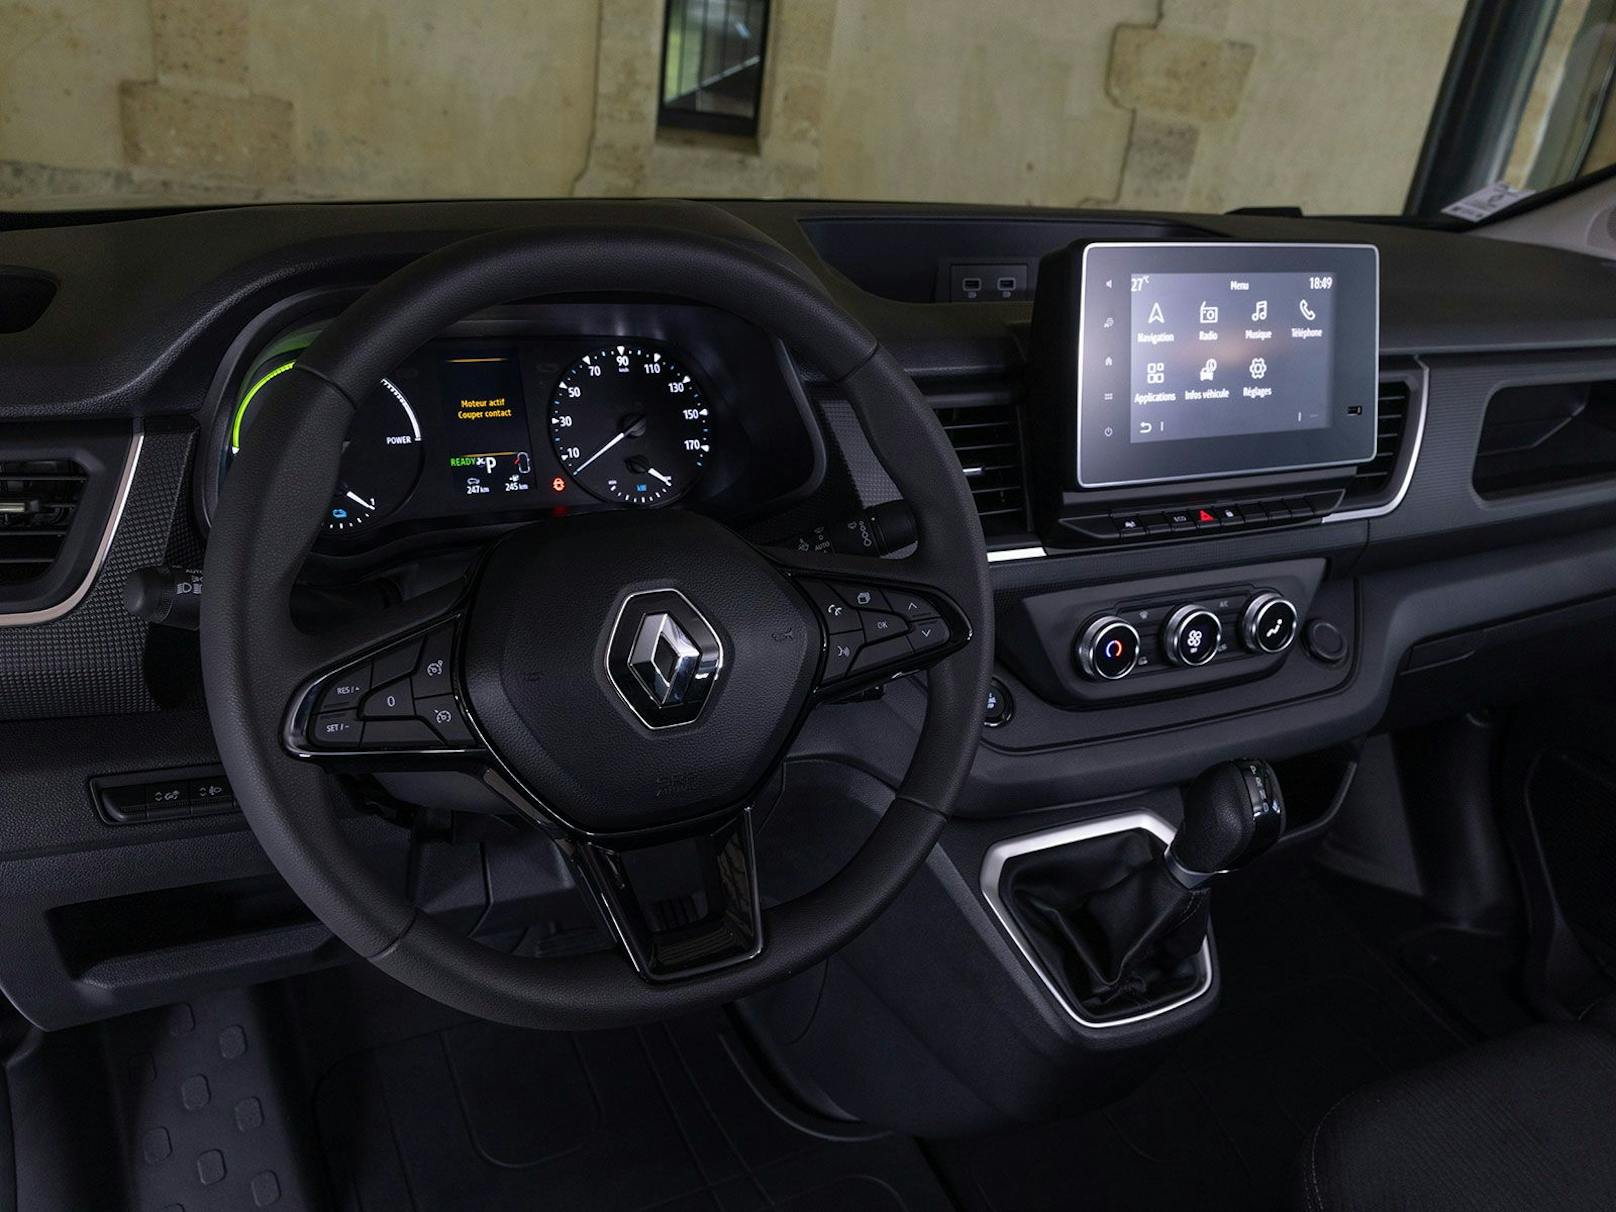 Modernes Cockpit mit Touchscreen im neuen Renault Trafic E-Tech Electric